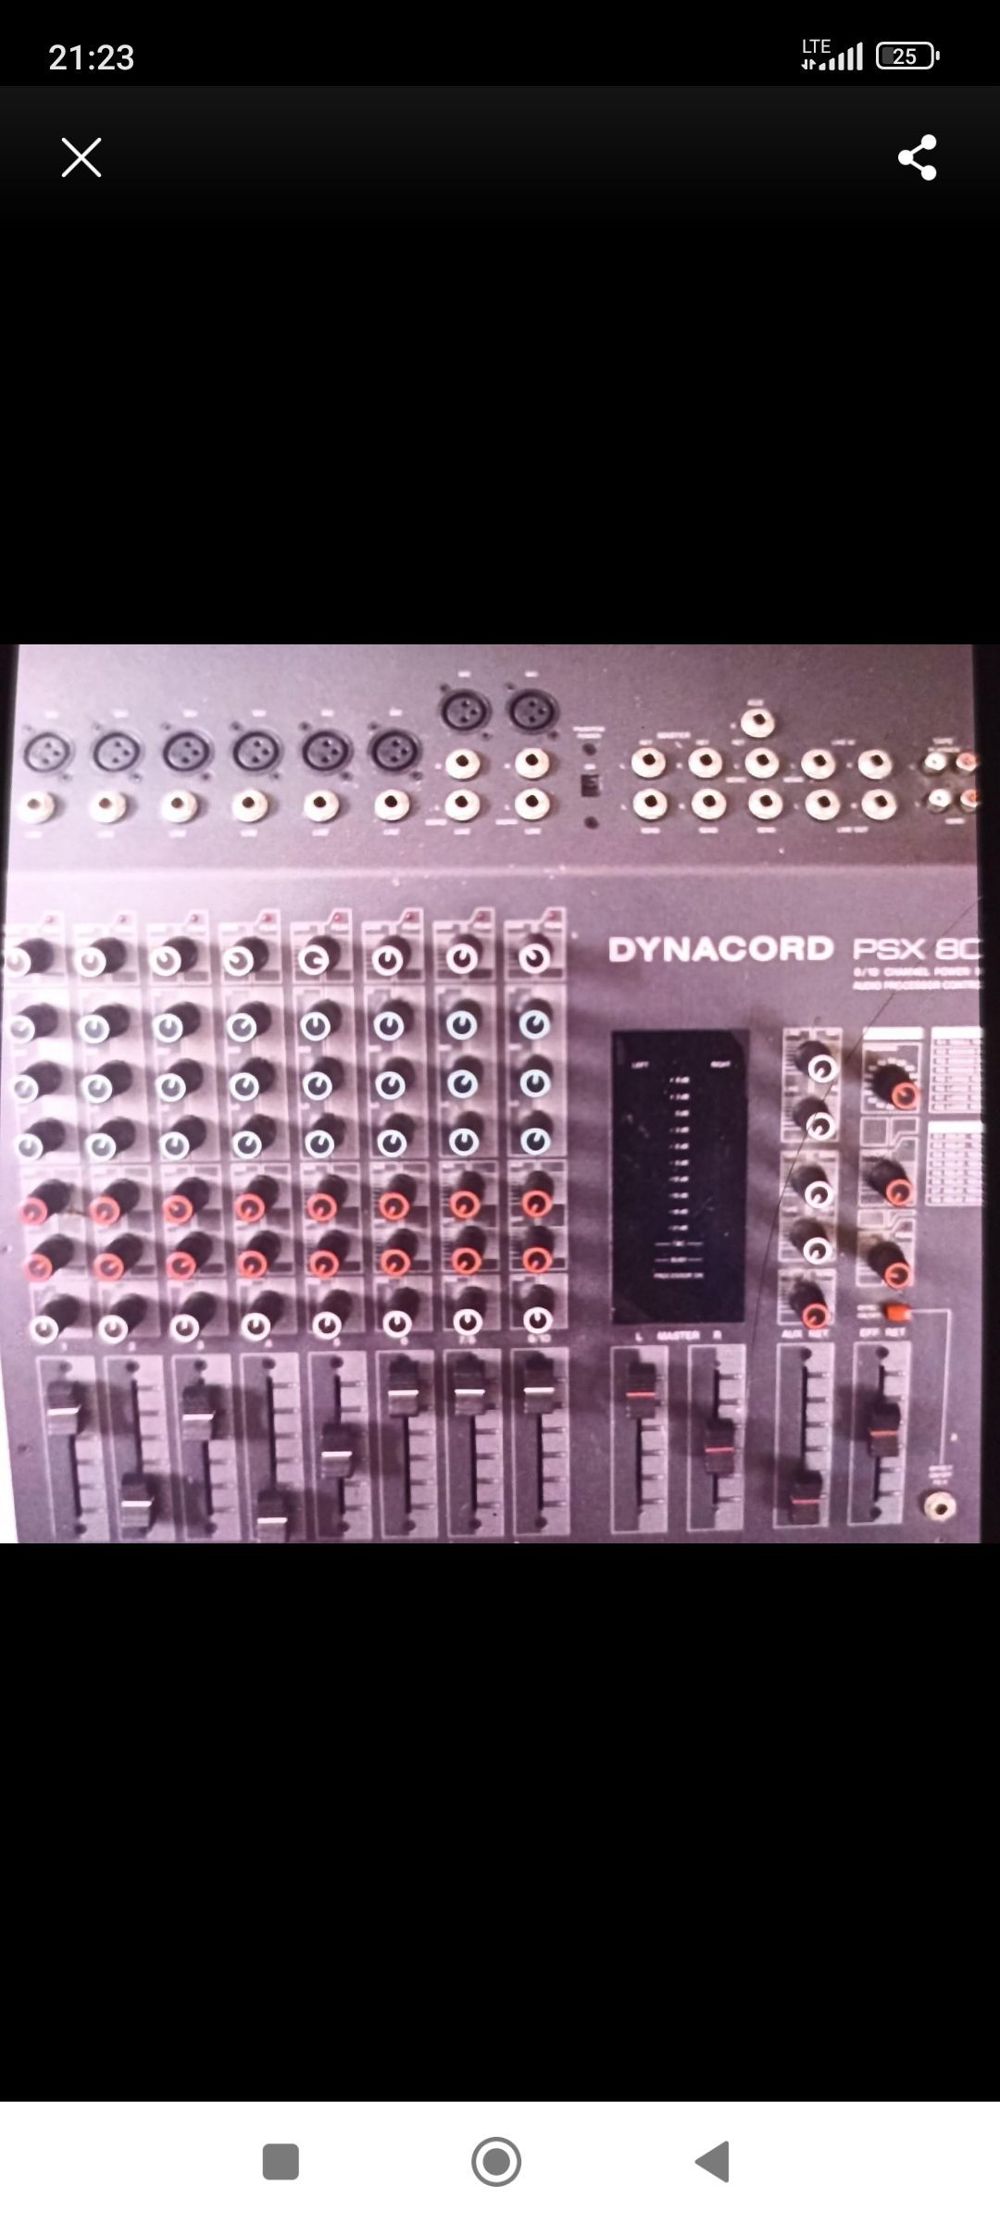 dynacord psx 802